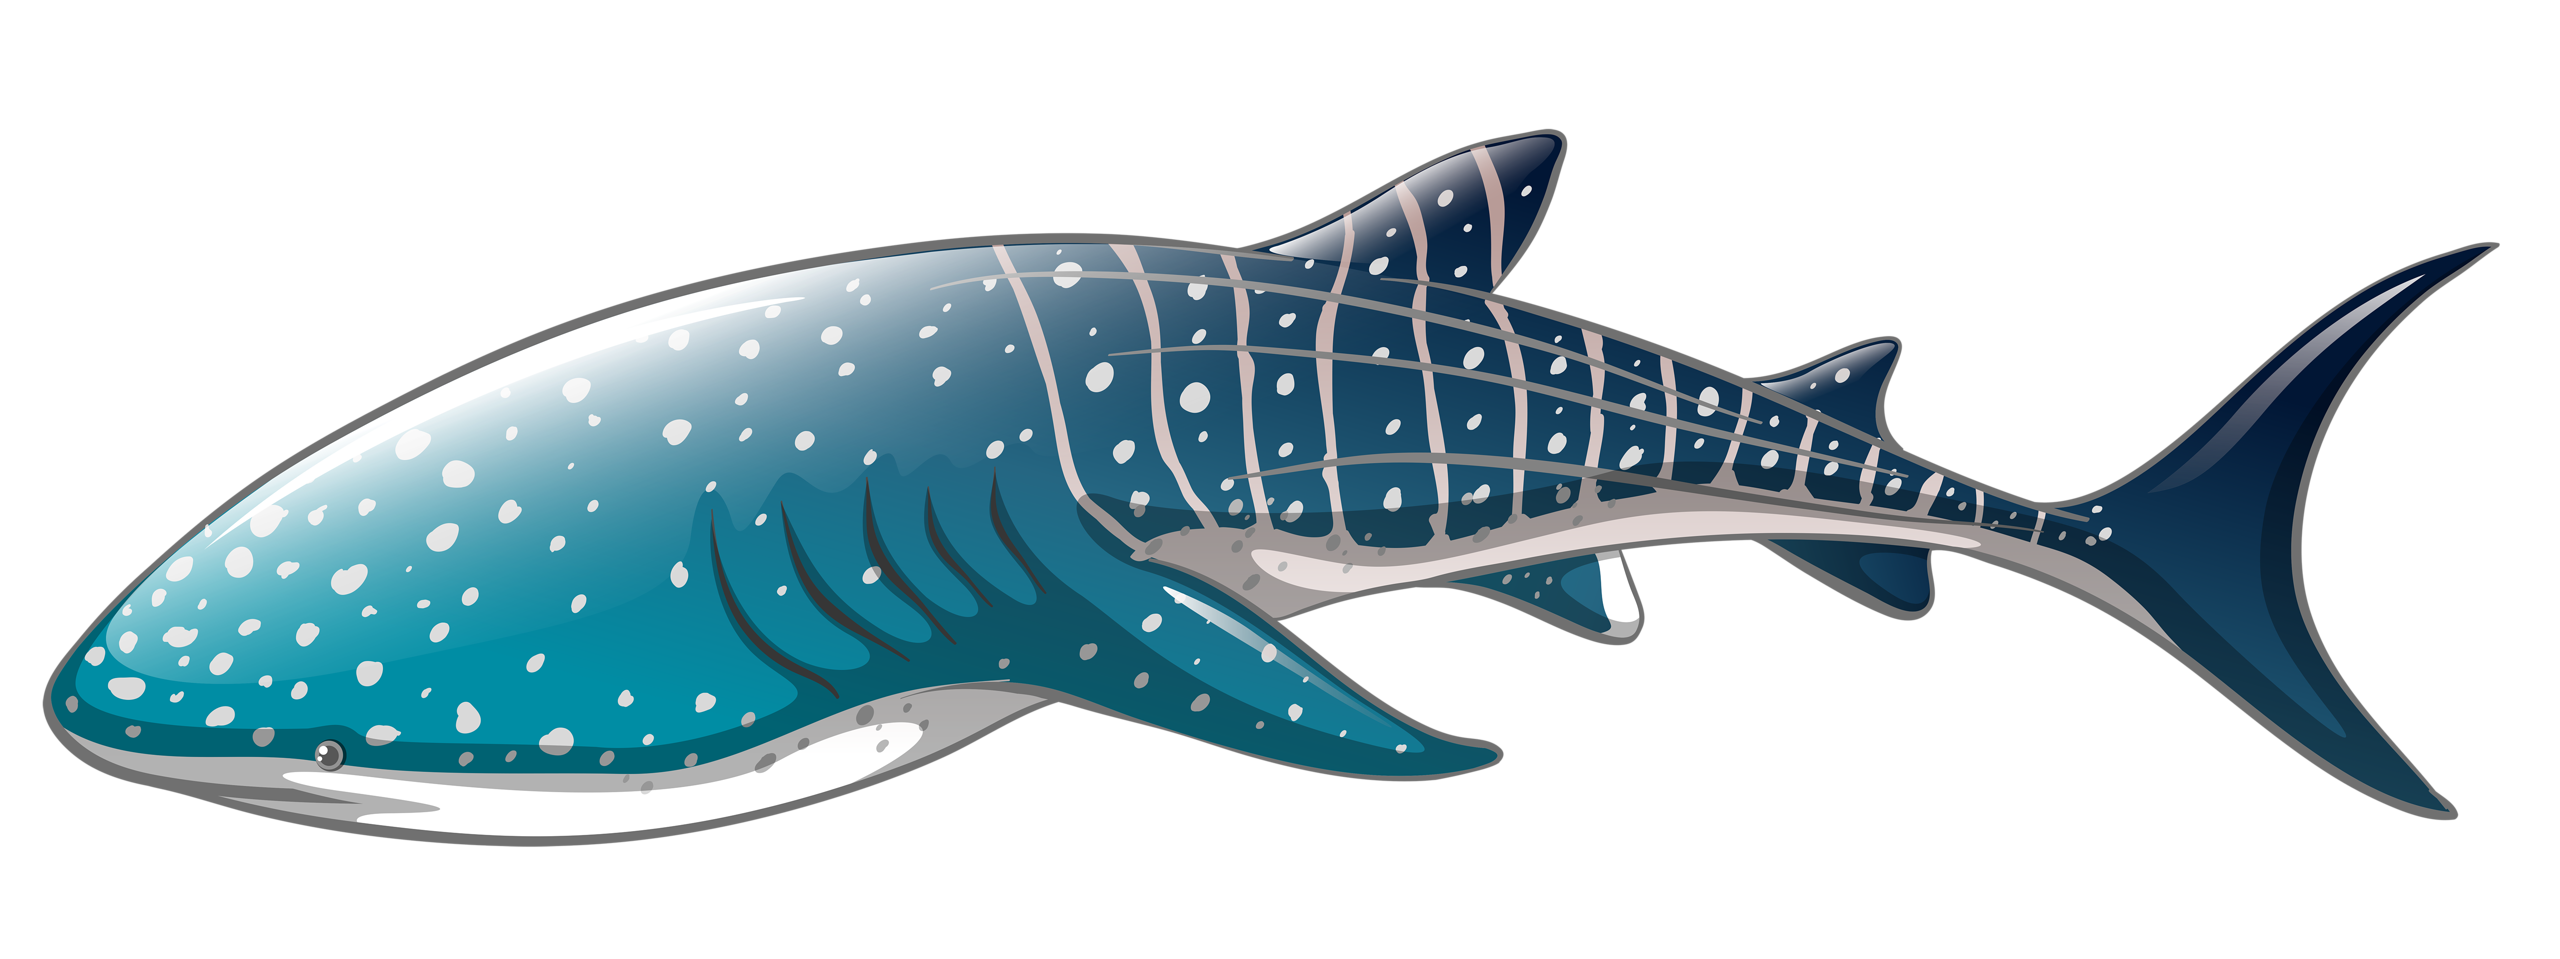 nemo clipart whale shark